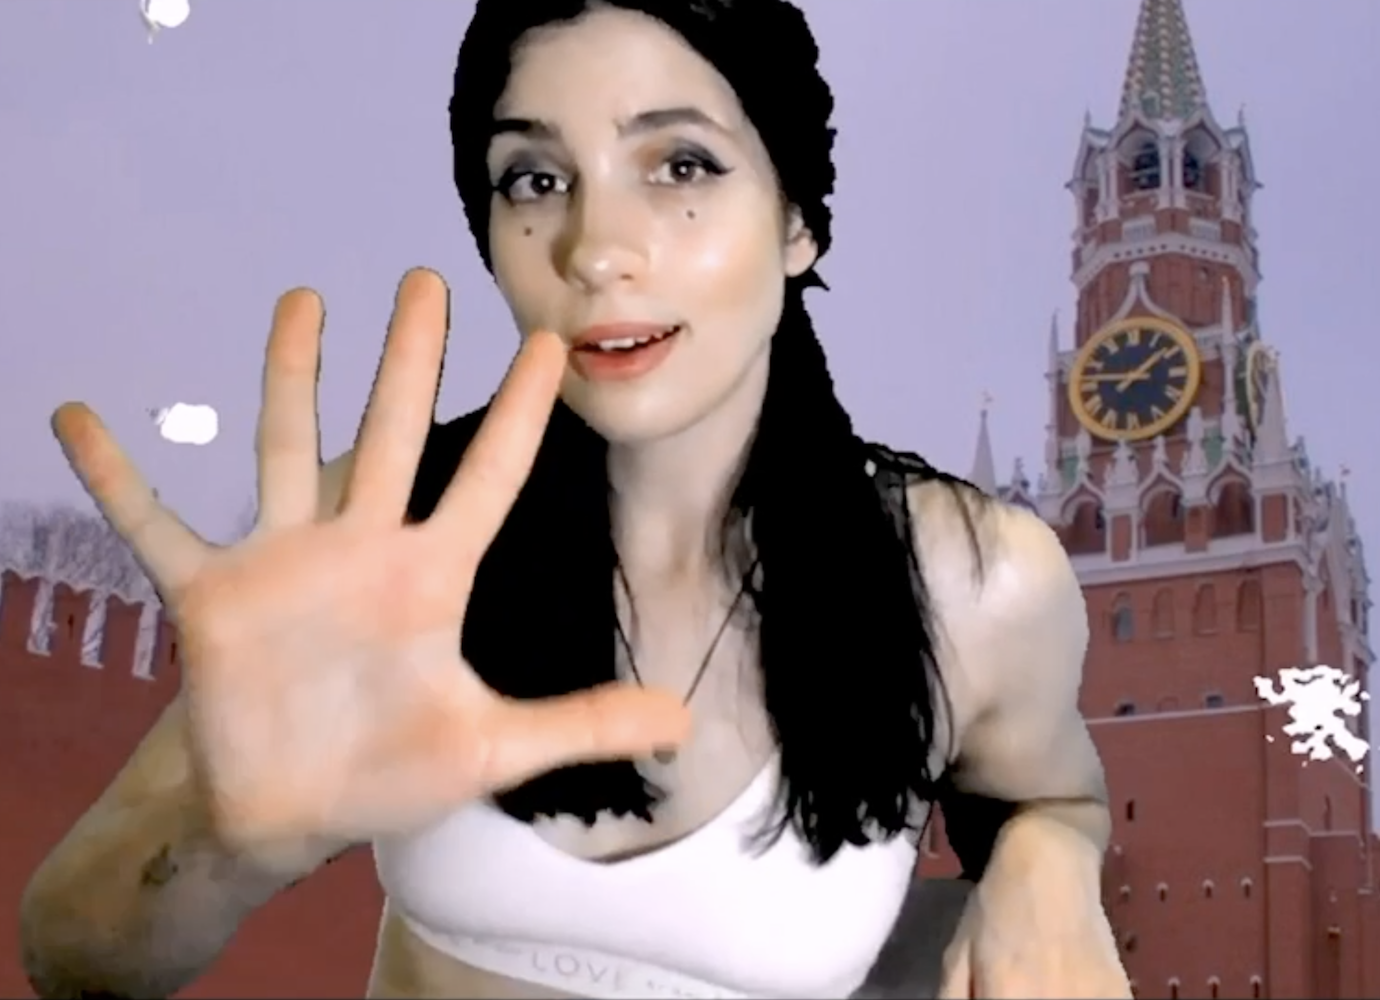 Pussy Riot’s Nadya Tolokonnikova shares 5 prison habits to get you through quarantine